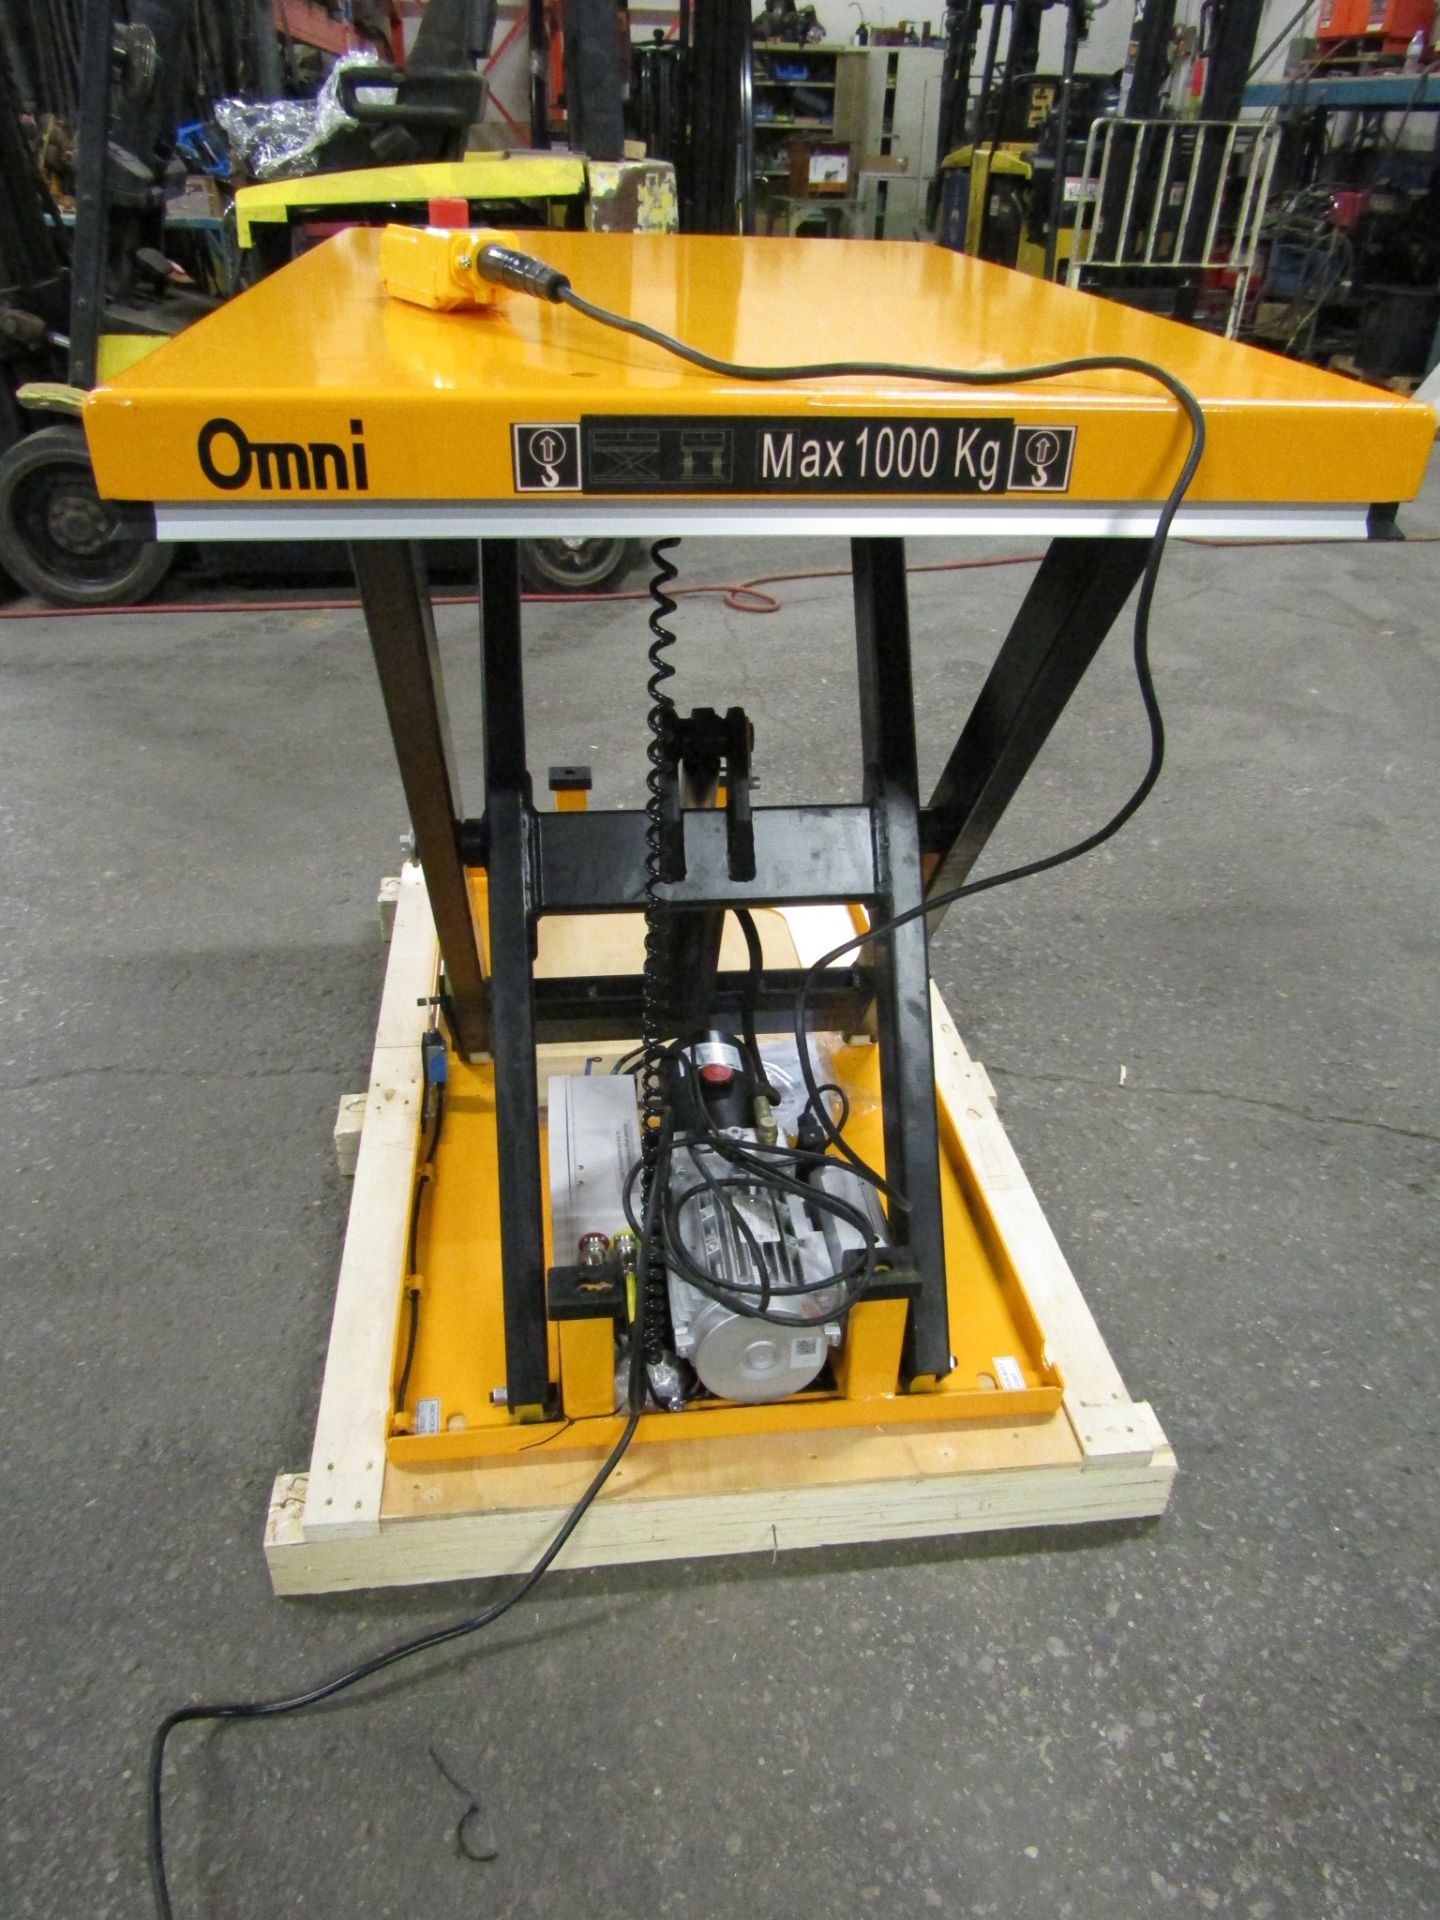 Omni Hydraulic Lift Table 32" x 52" x 40" lift - 2000lbs capacity - MINT - 115V - Image 2 of 2